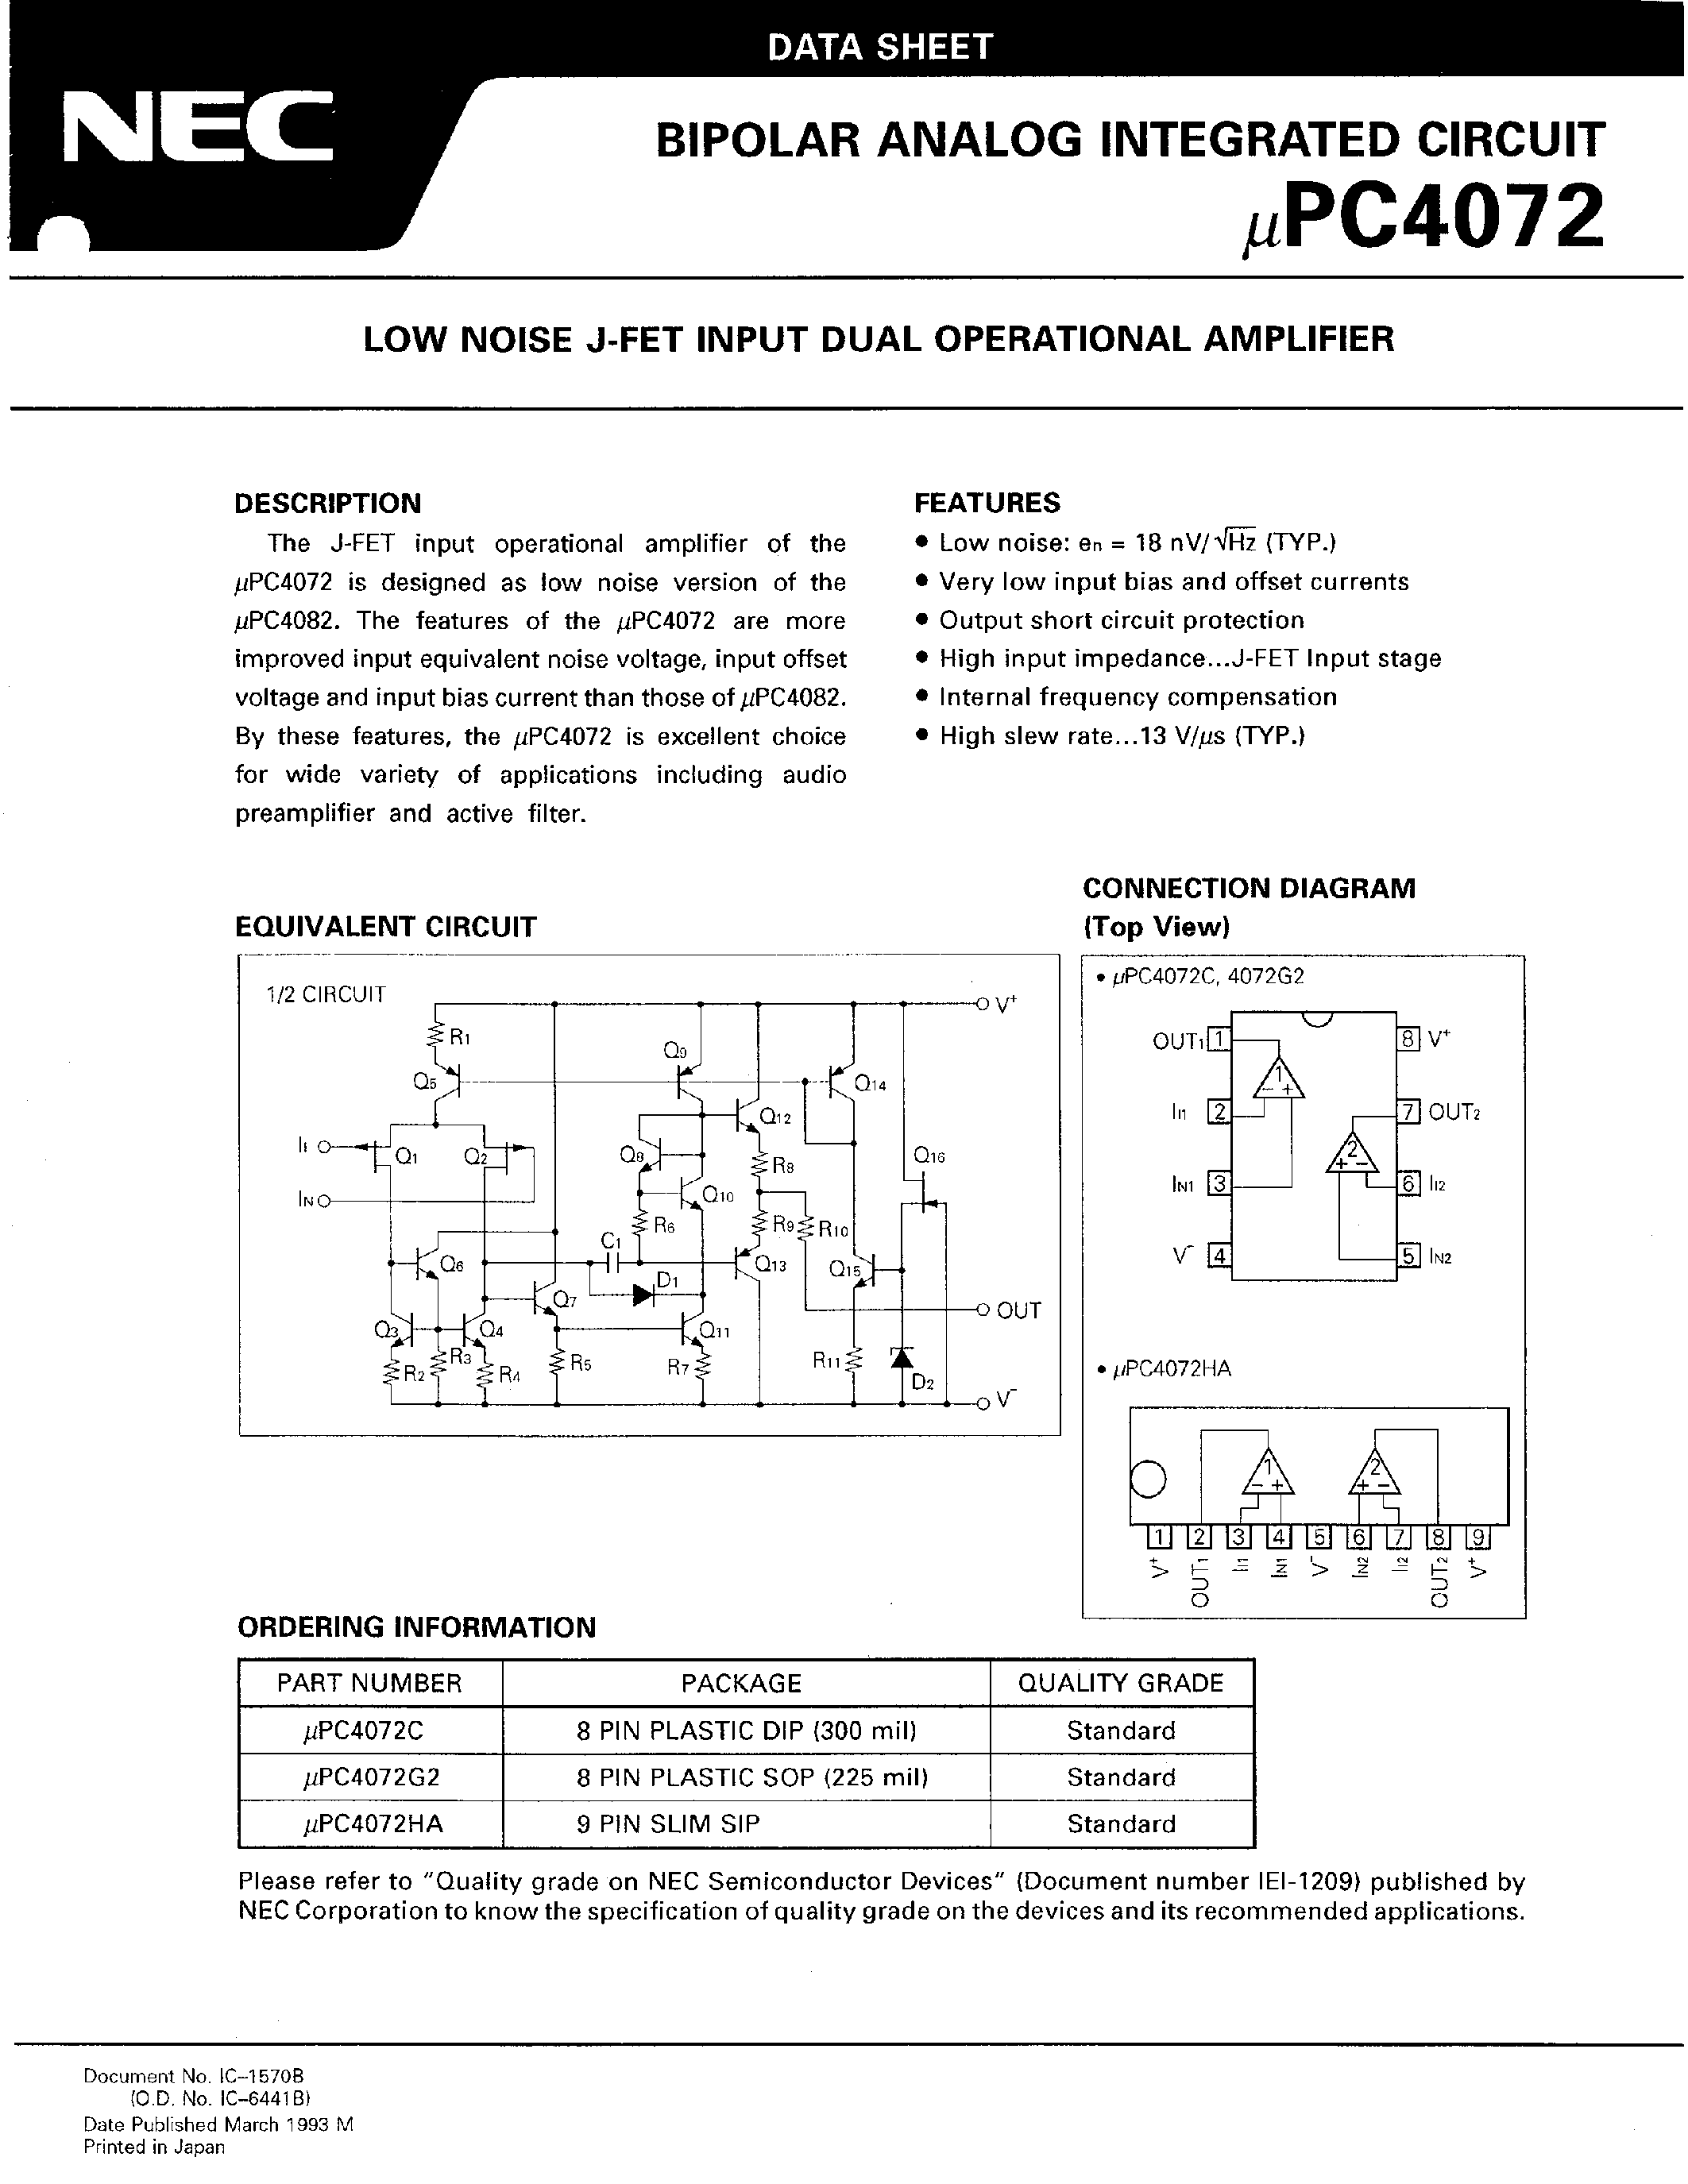 Datasheet UPC4072 - LOW NOISE J-FET INPUT DUAL OPERATIONAL AMPLIFIER page 1